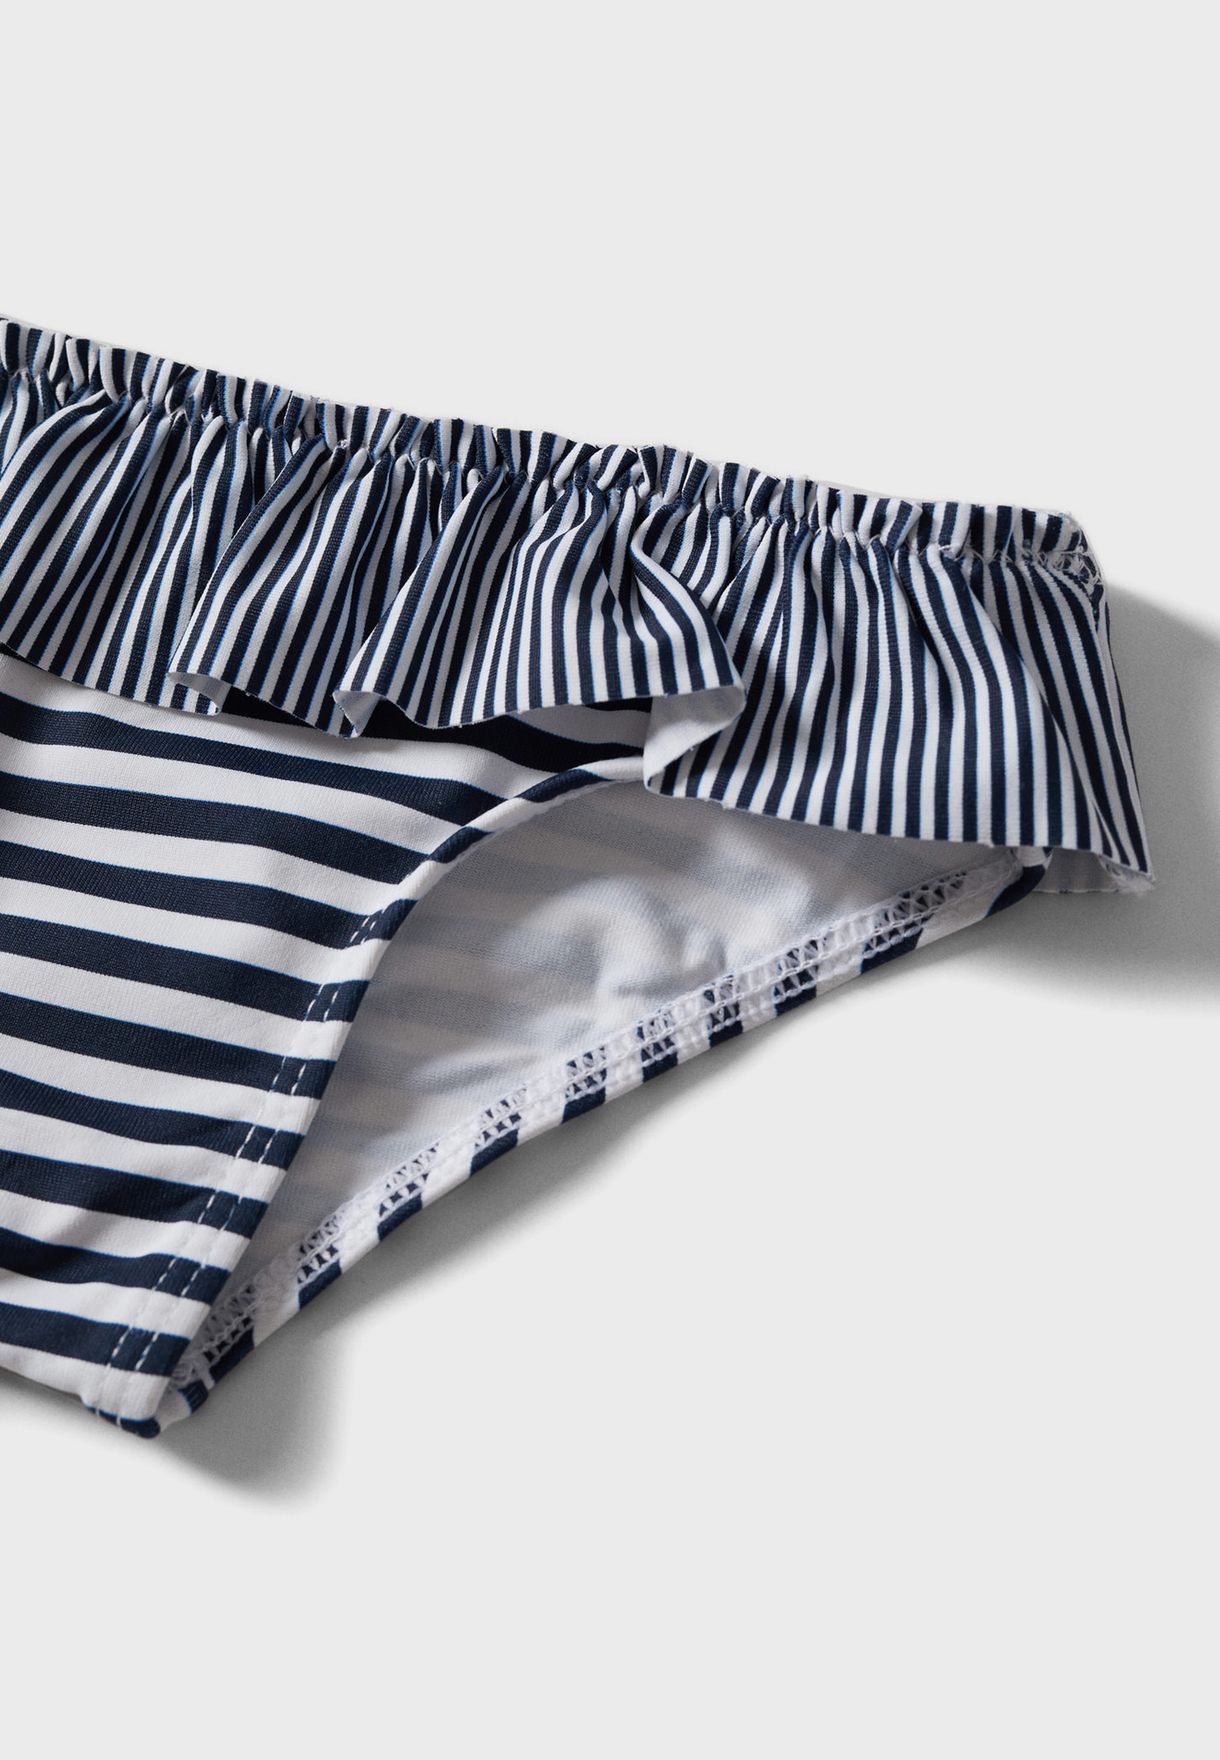 Infant Striped Ruffle Bikini Bottoms